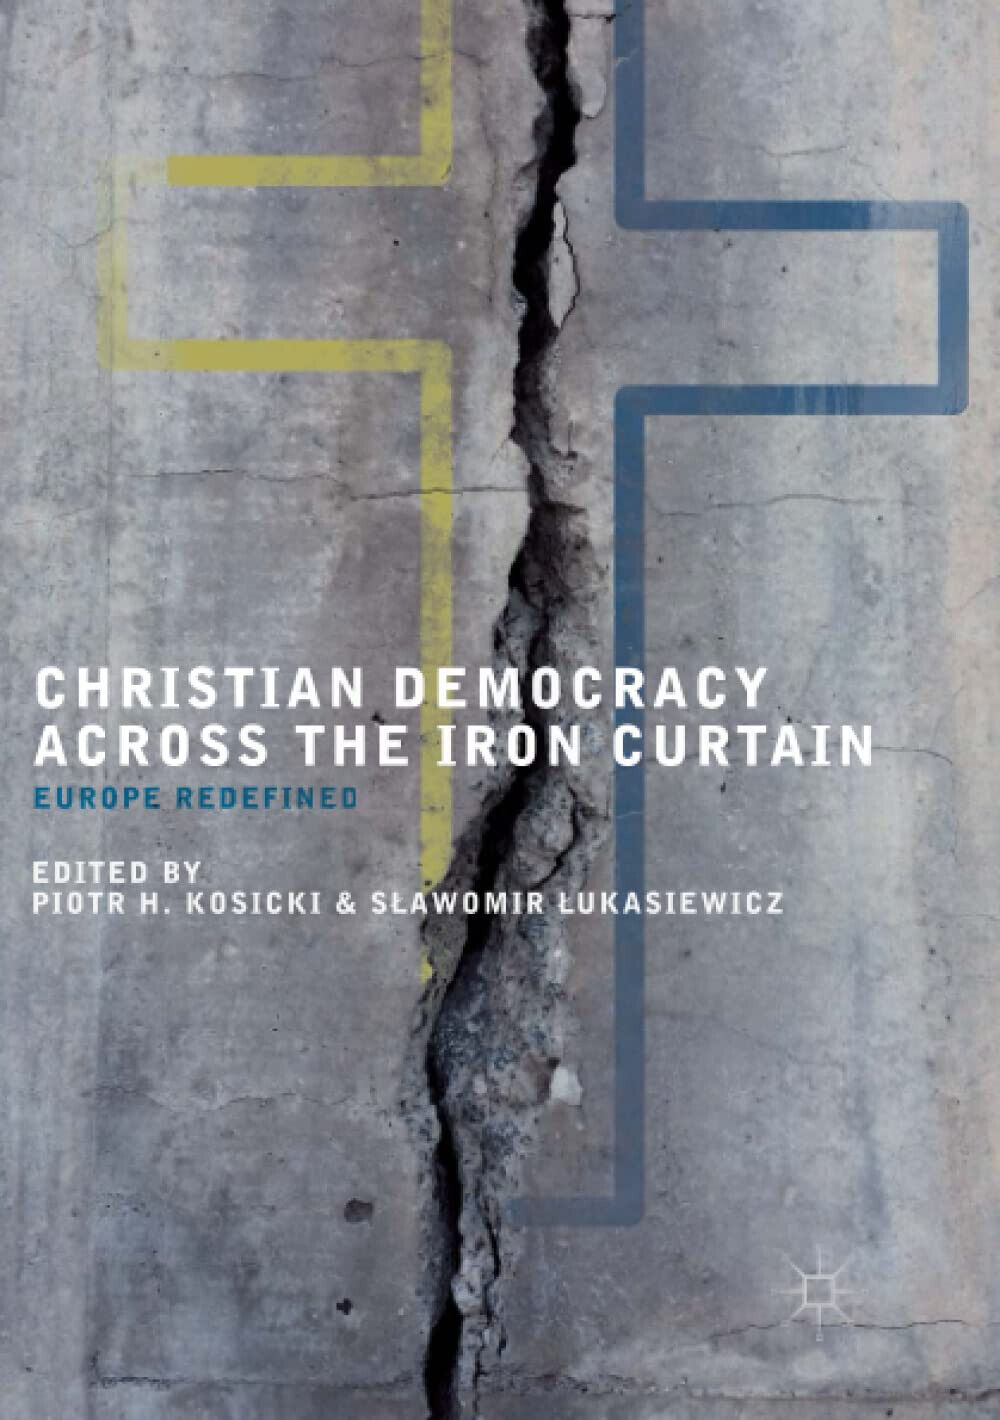 Christian Democracy Across the Iron Curtain - Piotr H. Kosicki - Springer, 2018